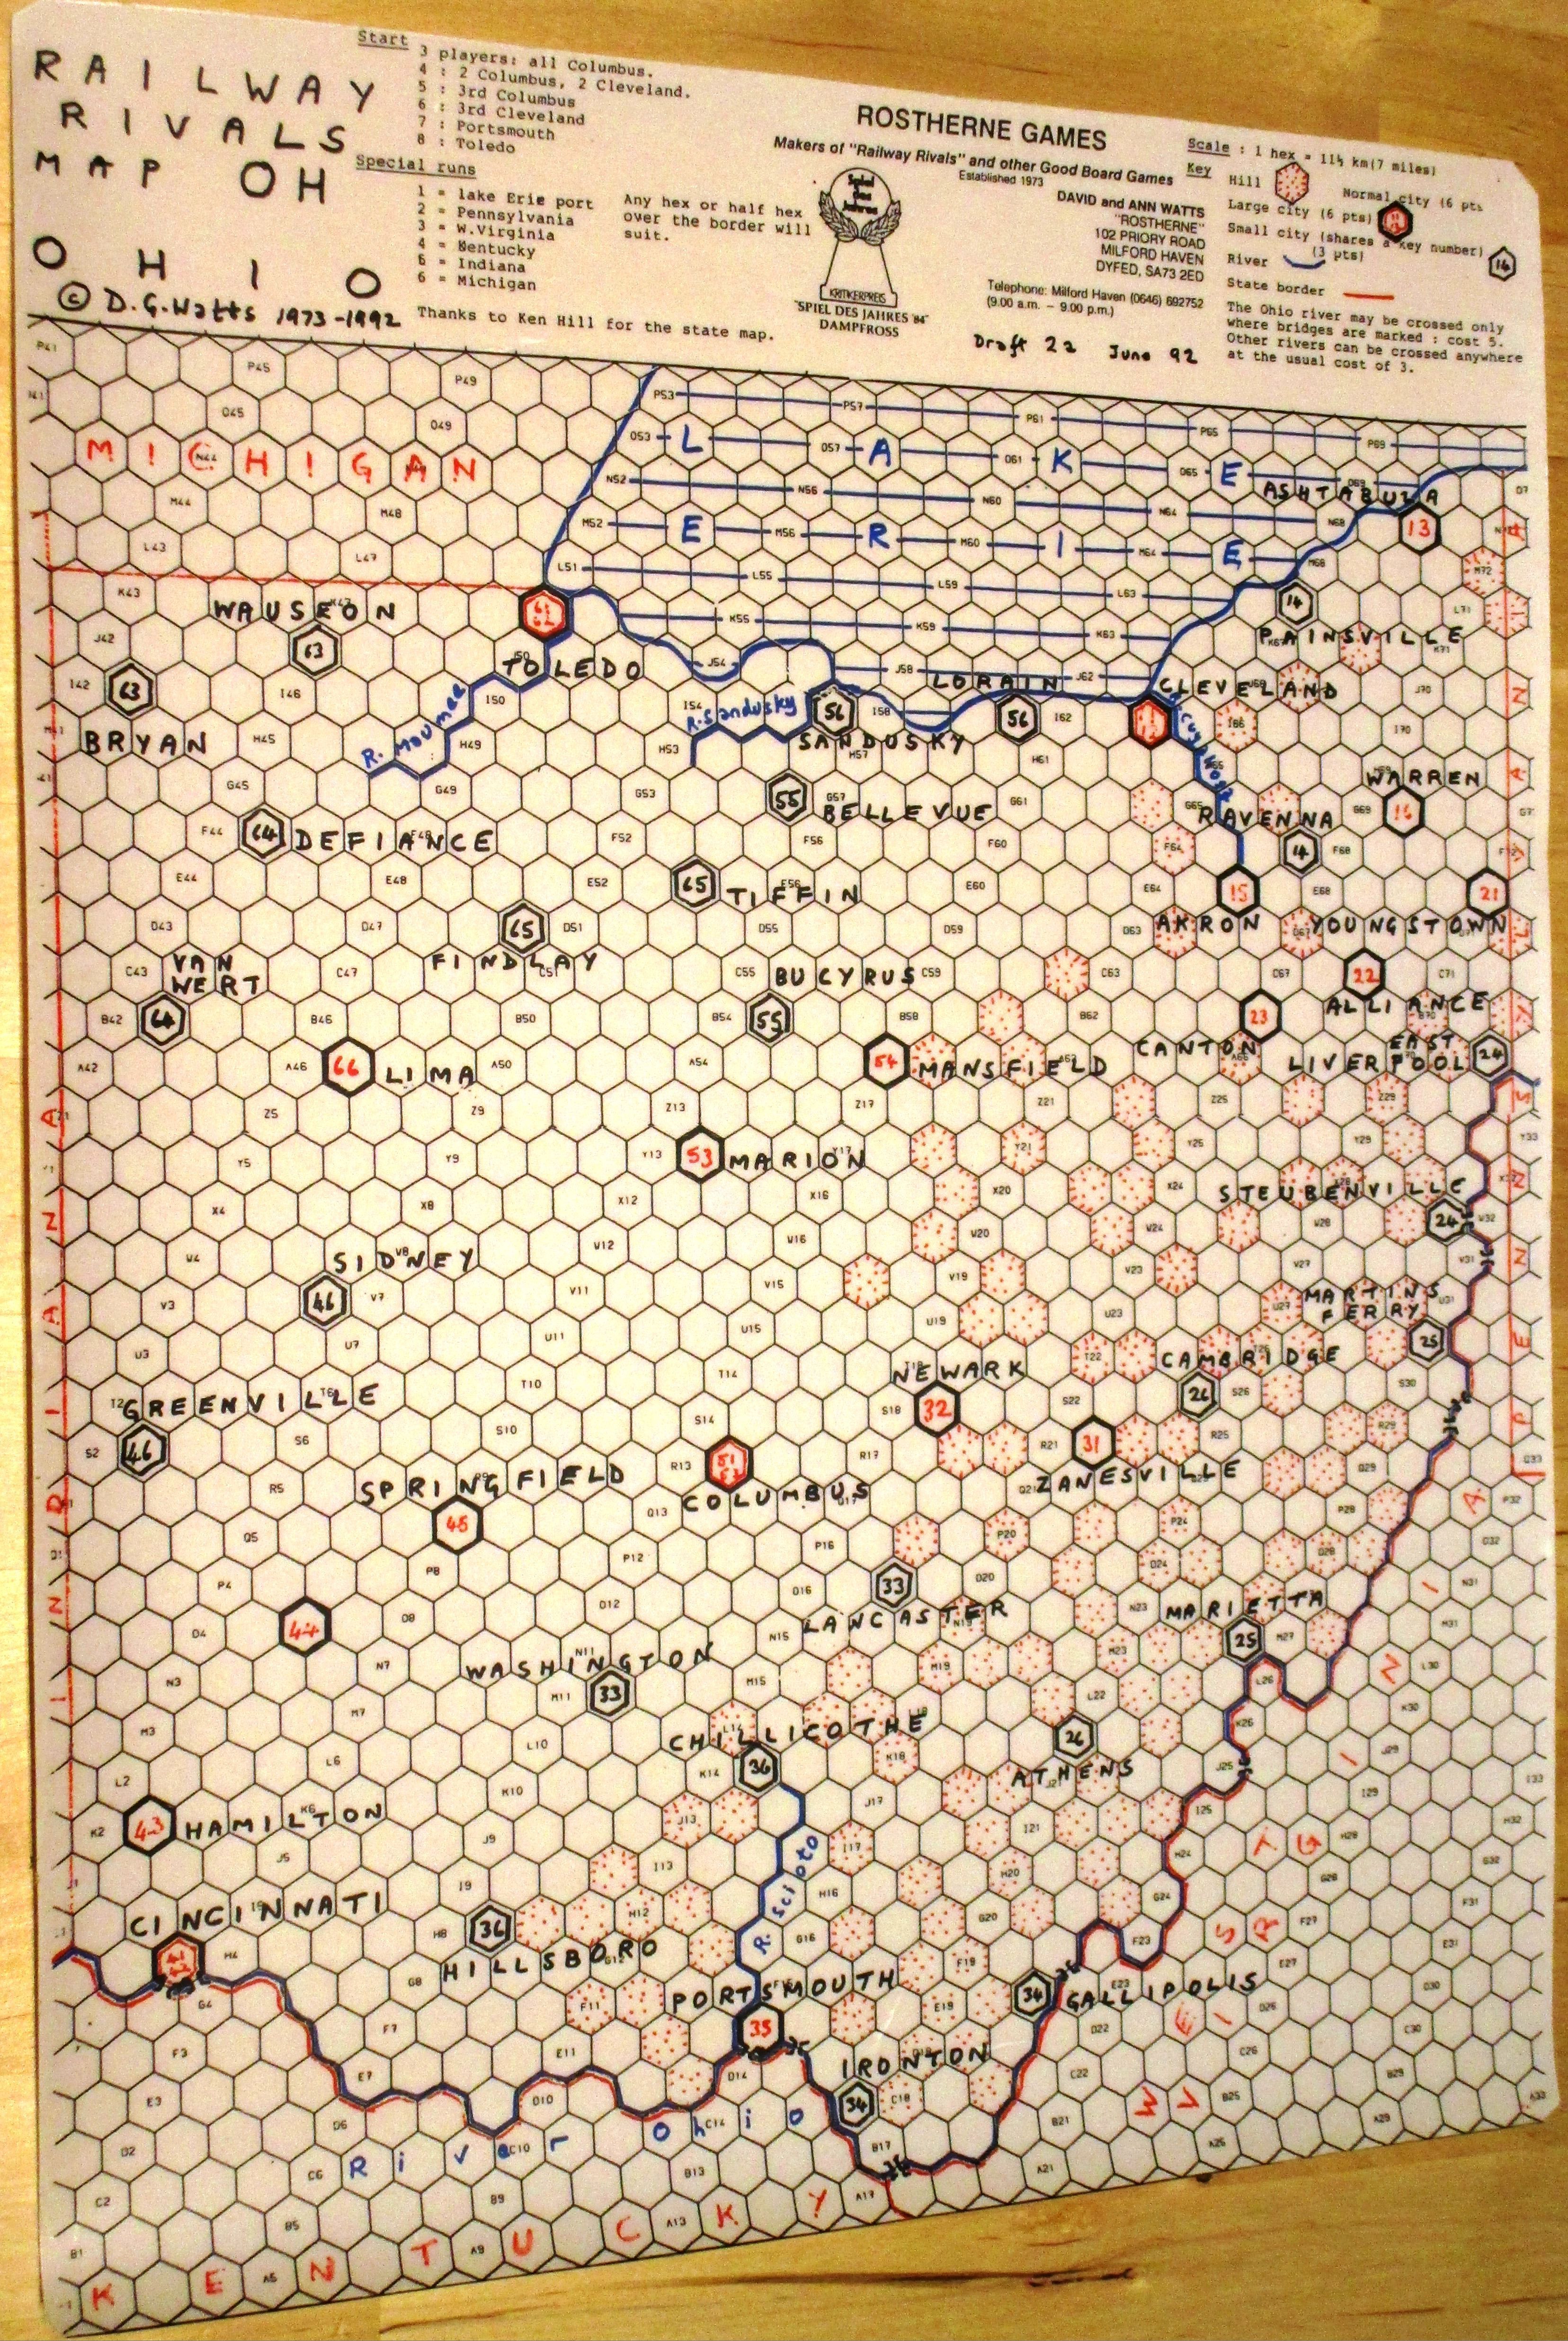 Railway Rivals Map OH: Ohio